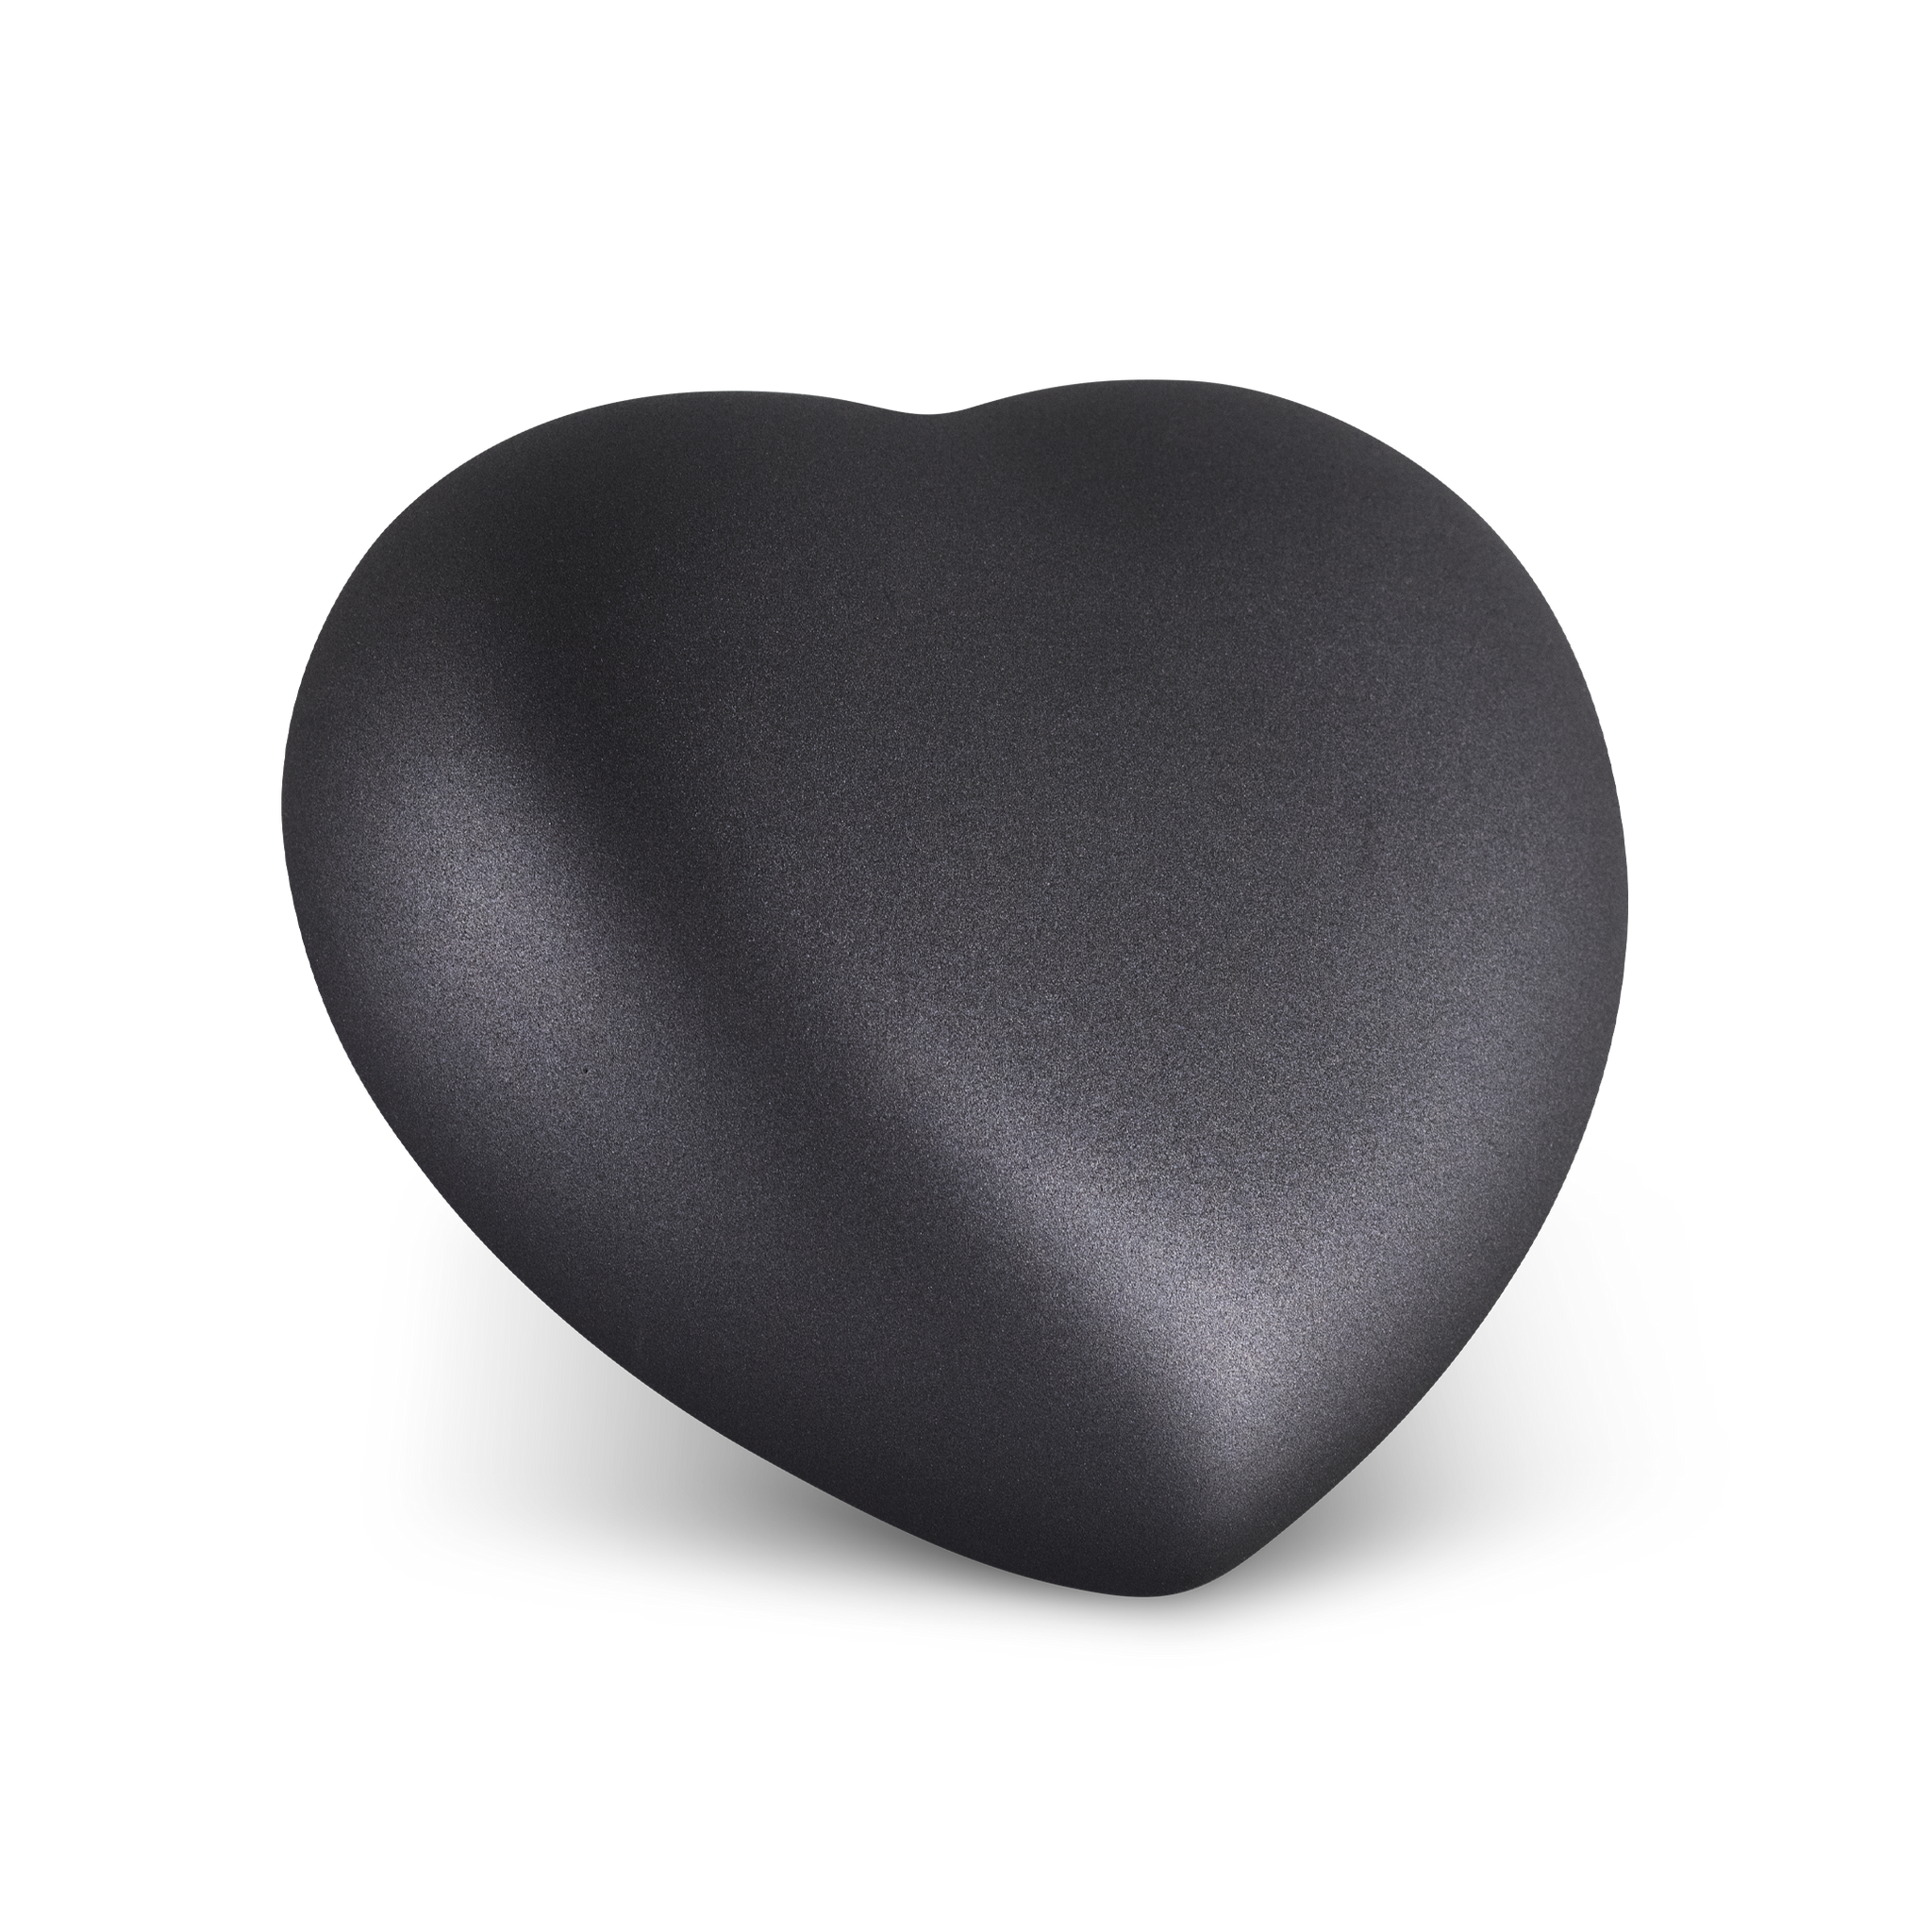 Tierurne - Keramik Herz schwarz 1500ml